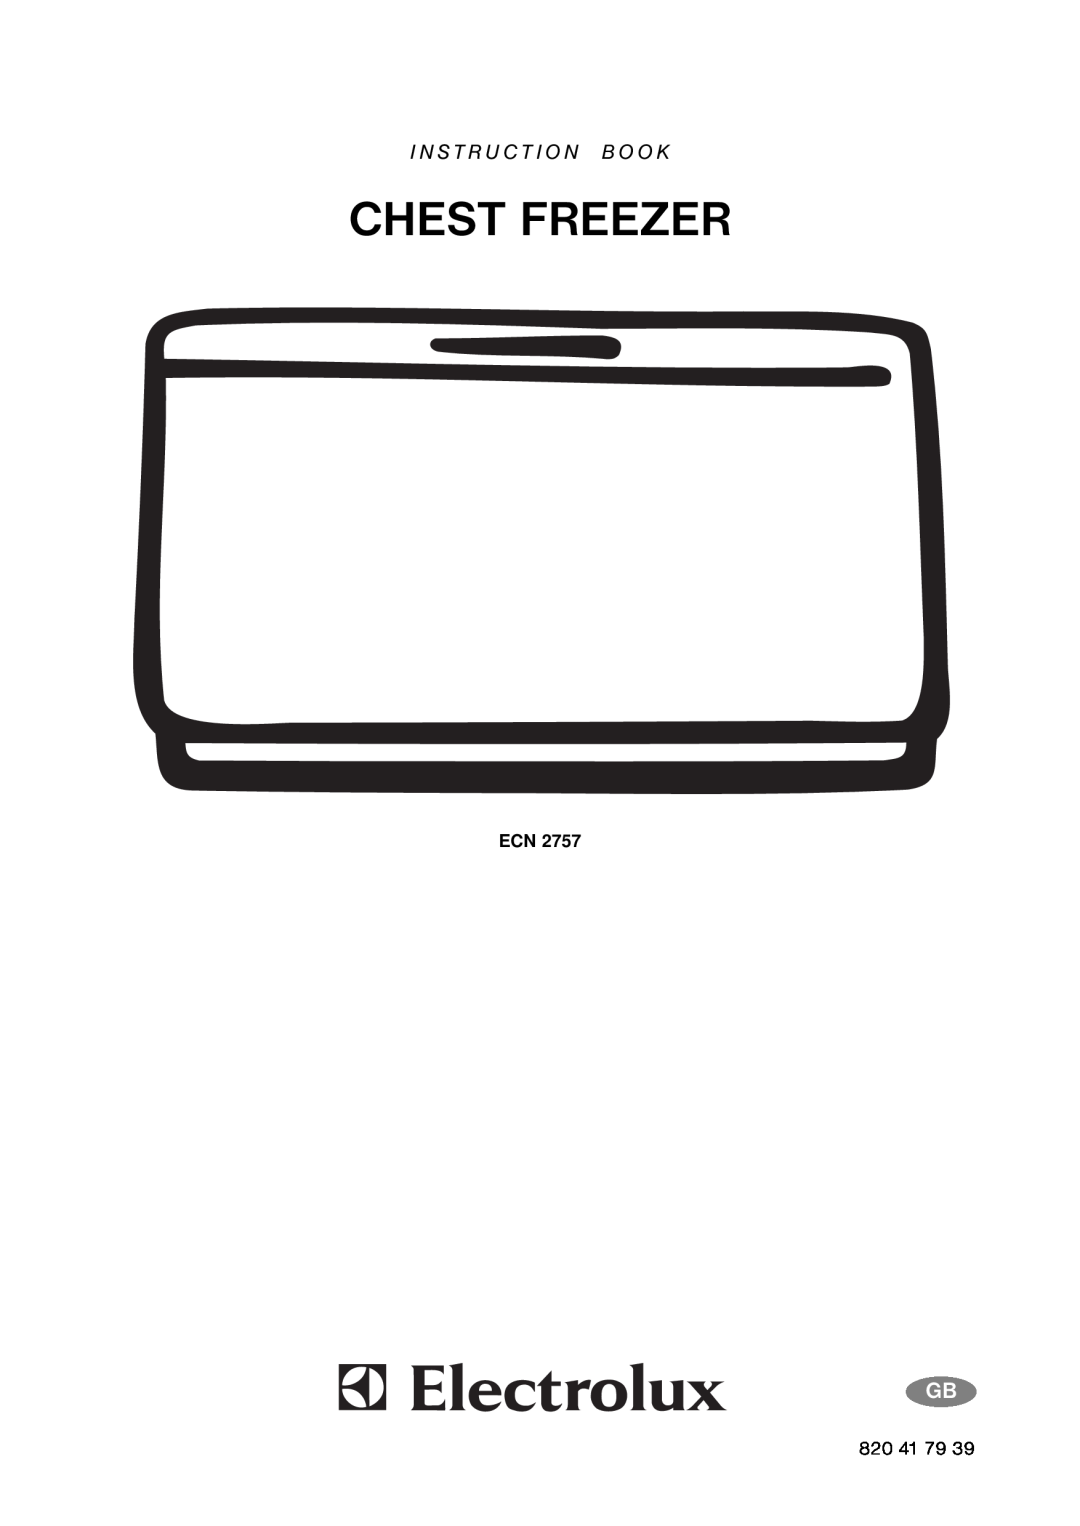 Electrolux ECN 2757 manual Chest Freezer, I N S T R U C T I O N B O O K 